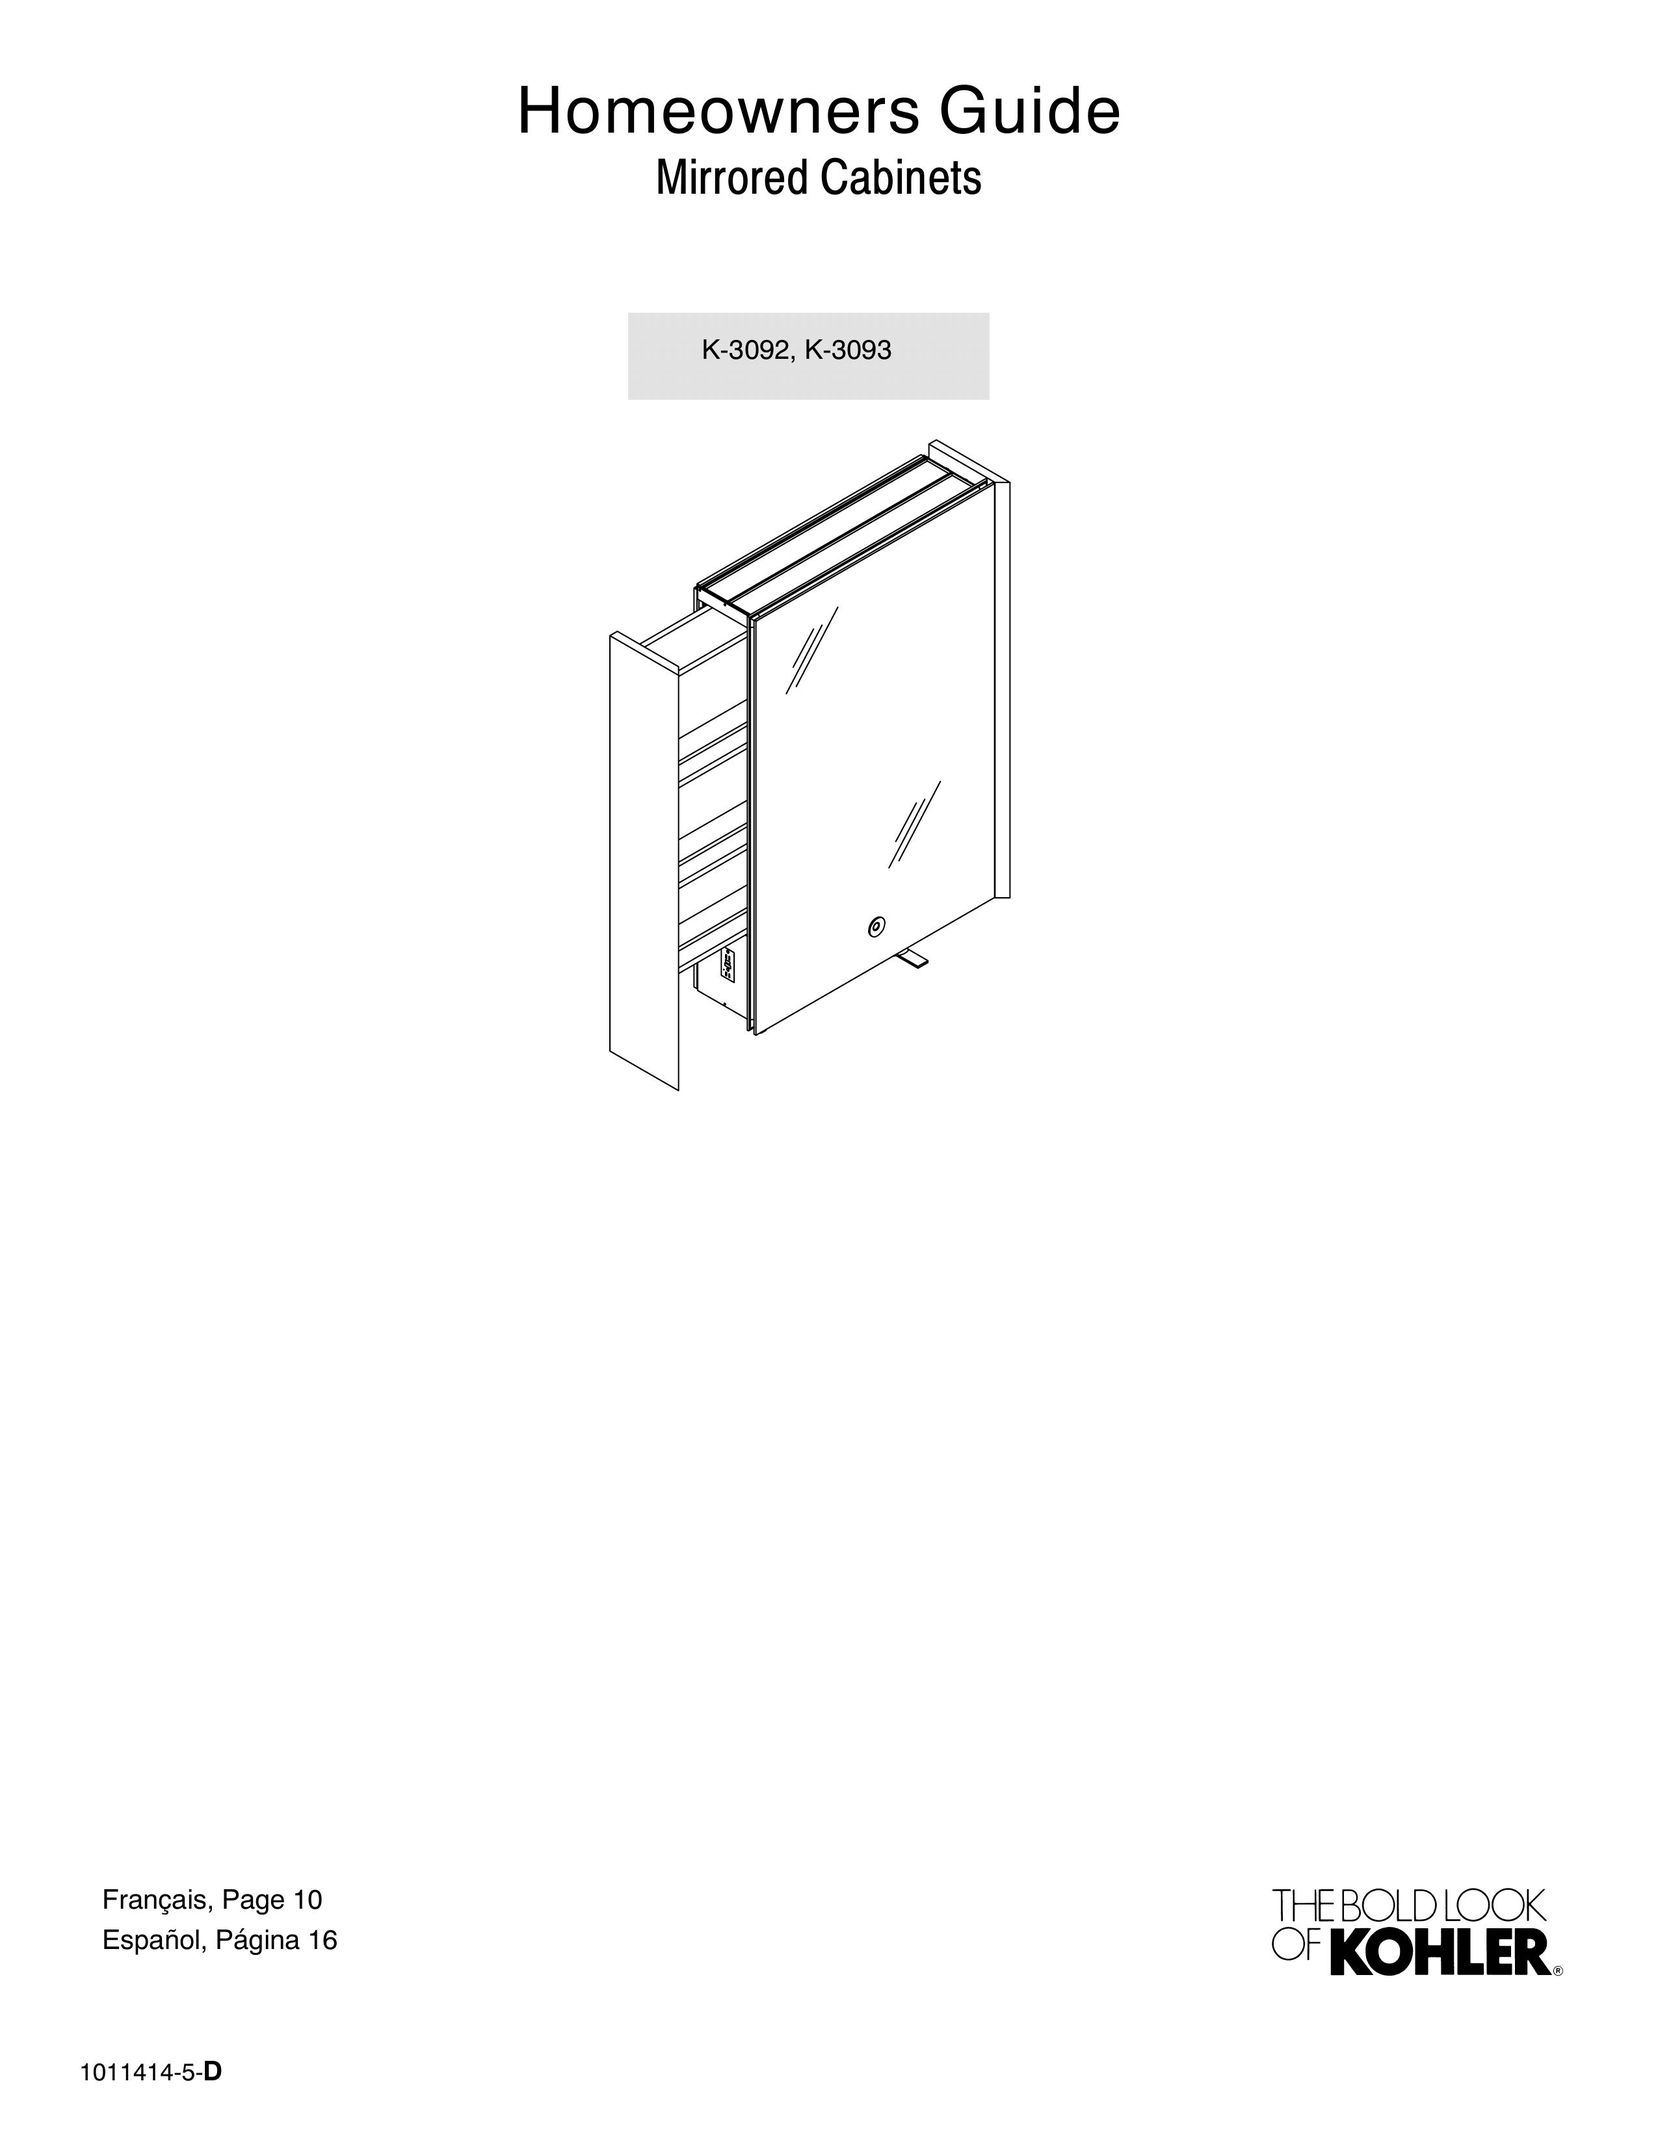 Kohler K-3092 Indoor Furnishings User Manual